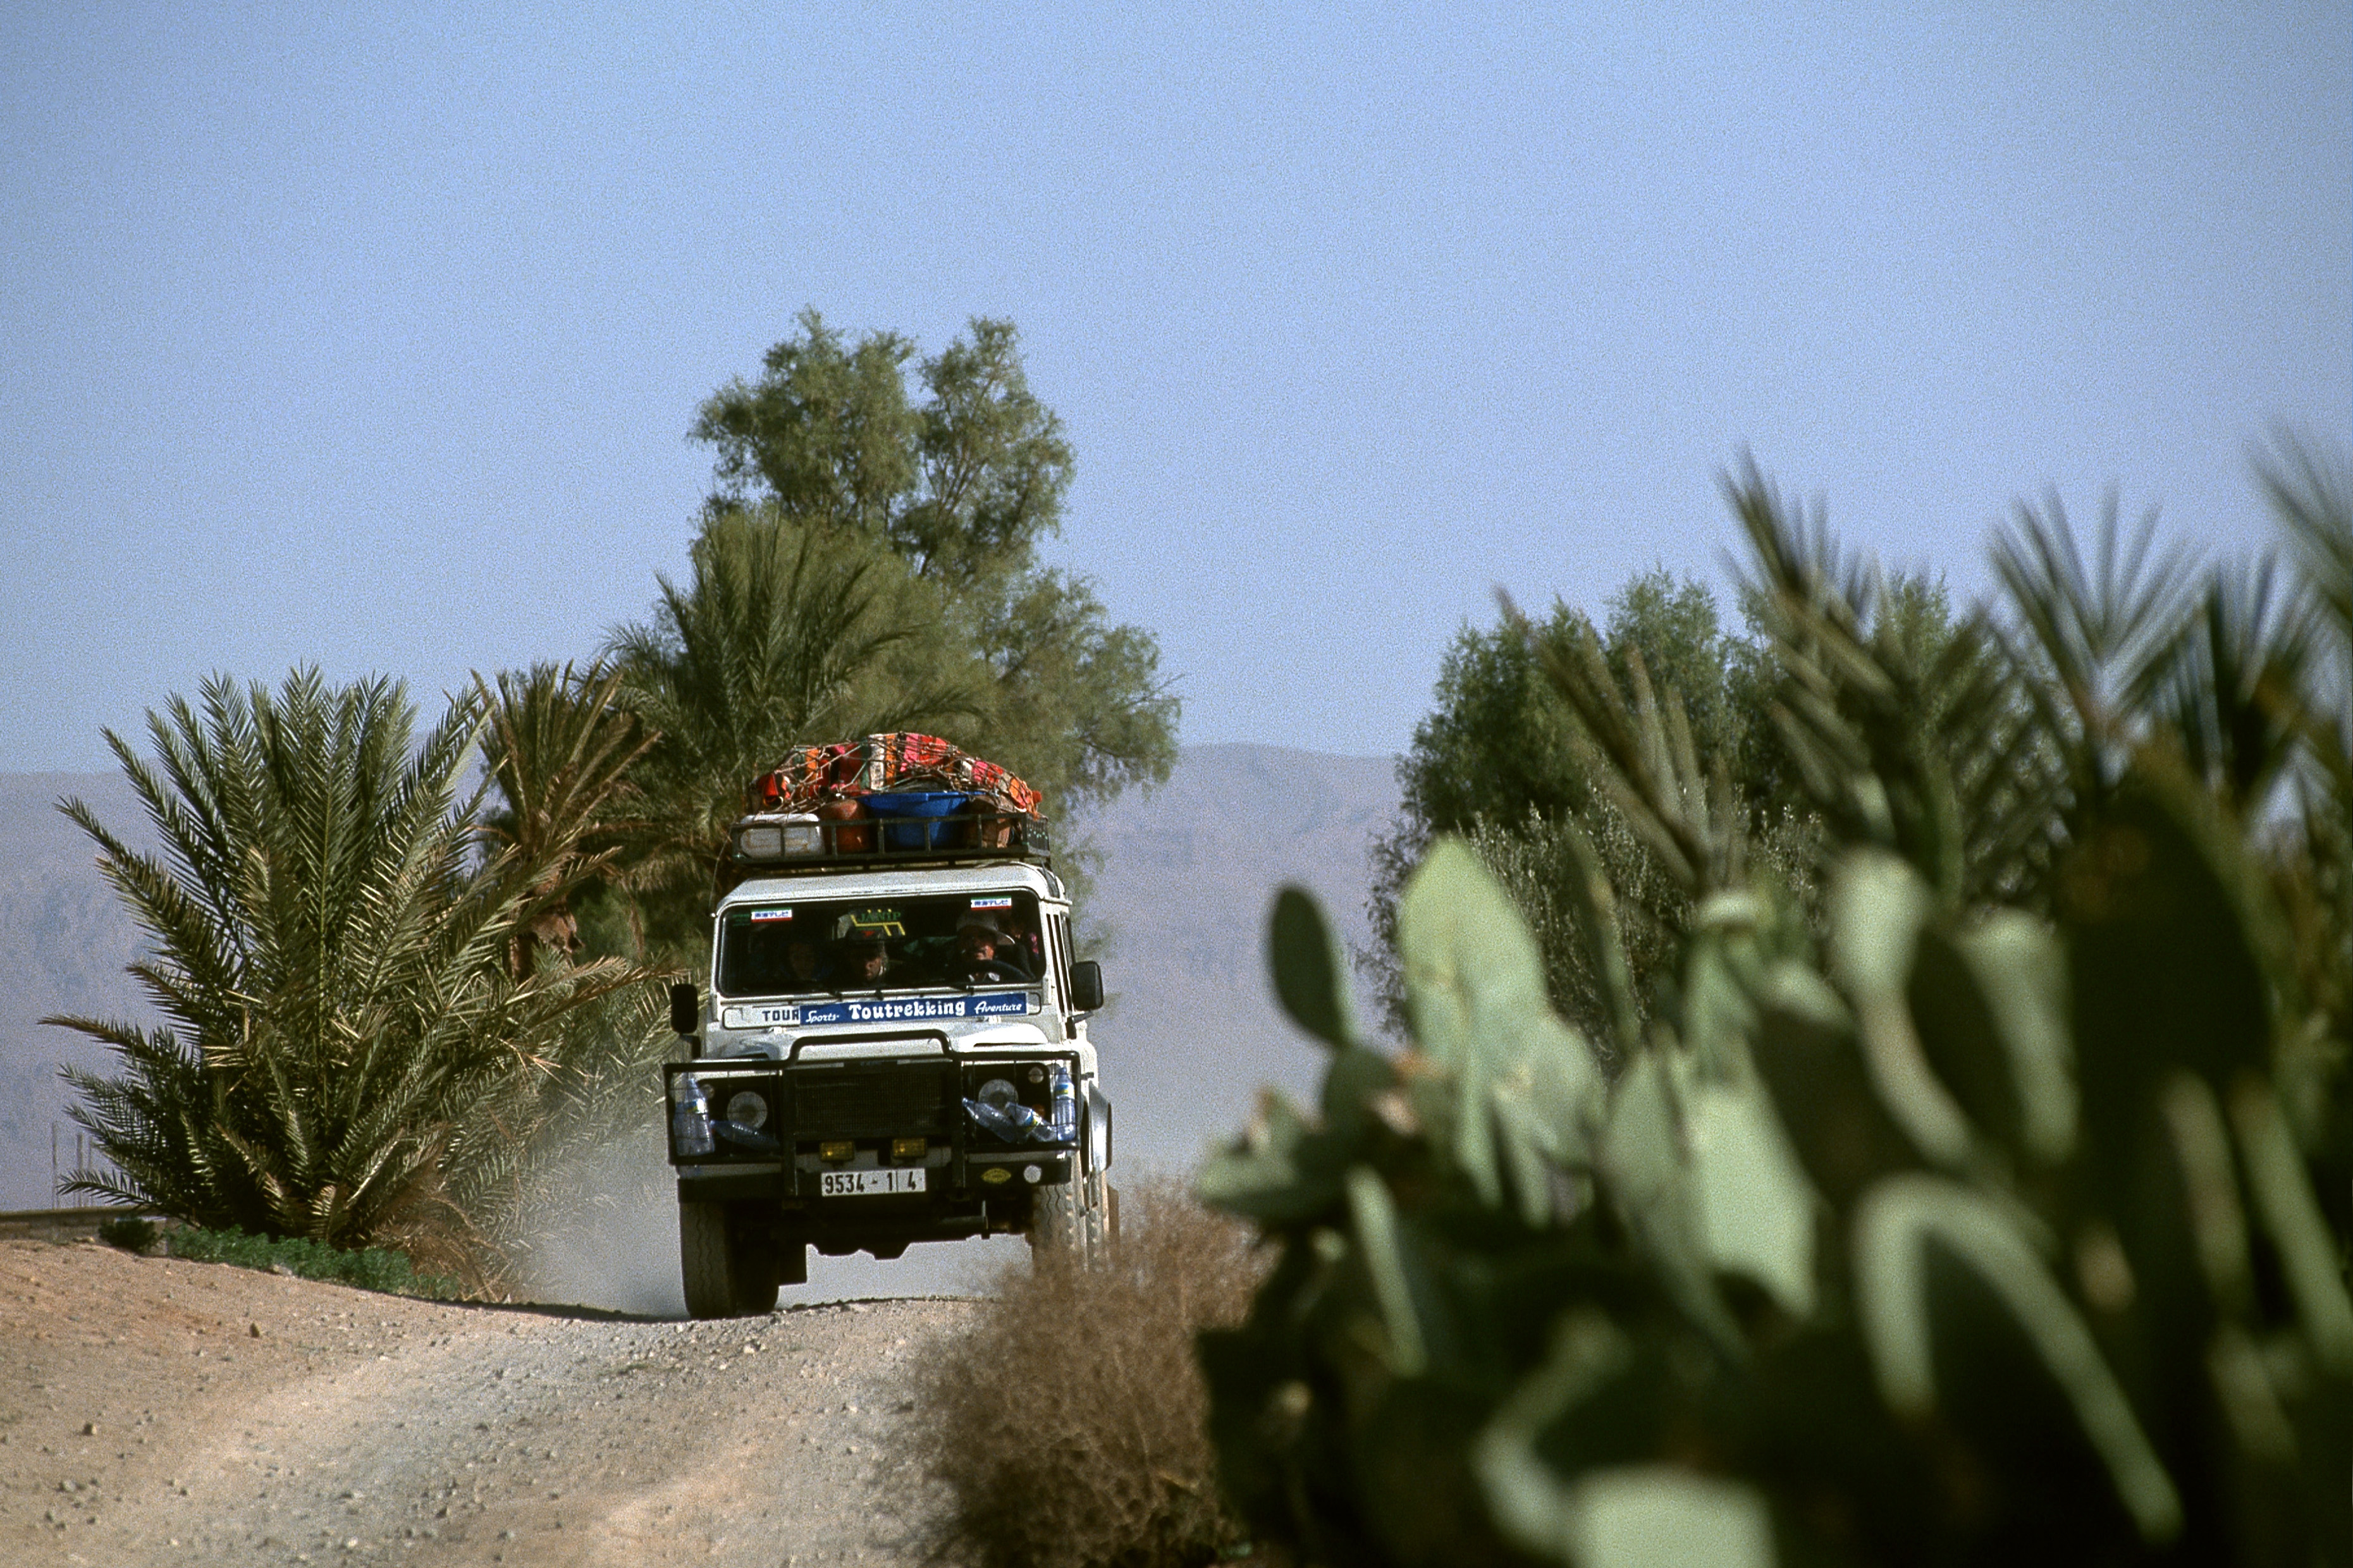 Enjoy a jeep safari into the desert